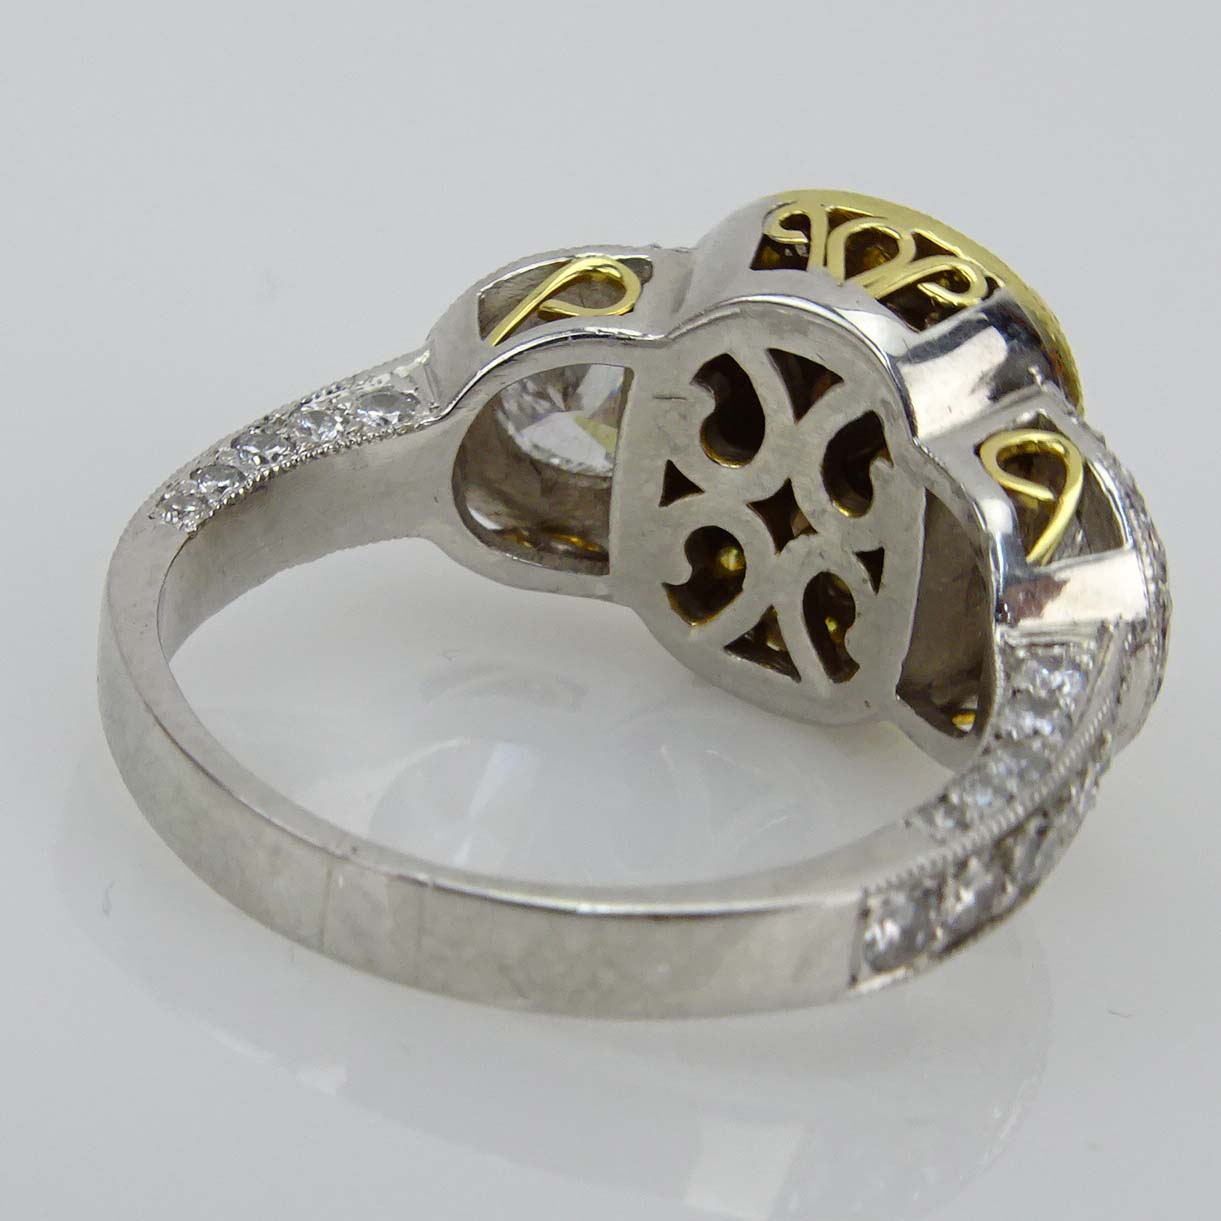 Approx. 5.10 Carat TW Diamond and Platinum Engagement Ring.